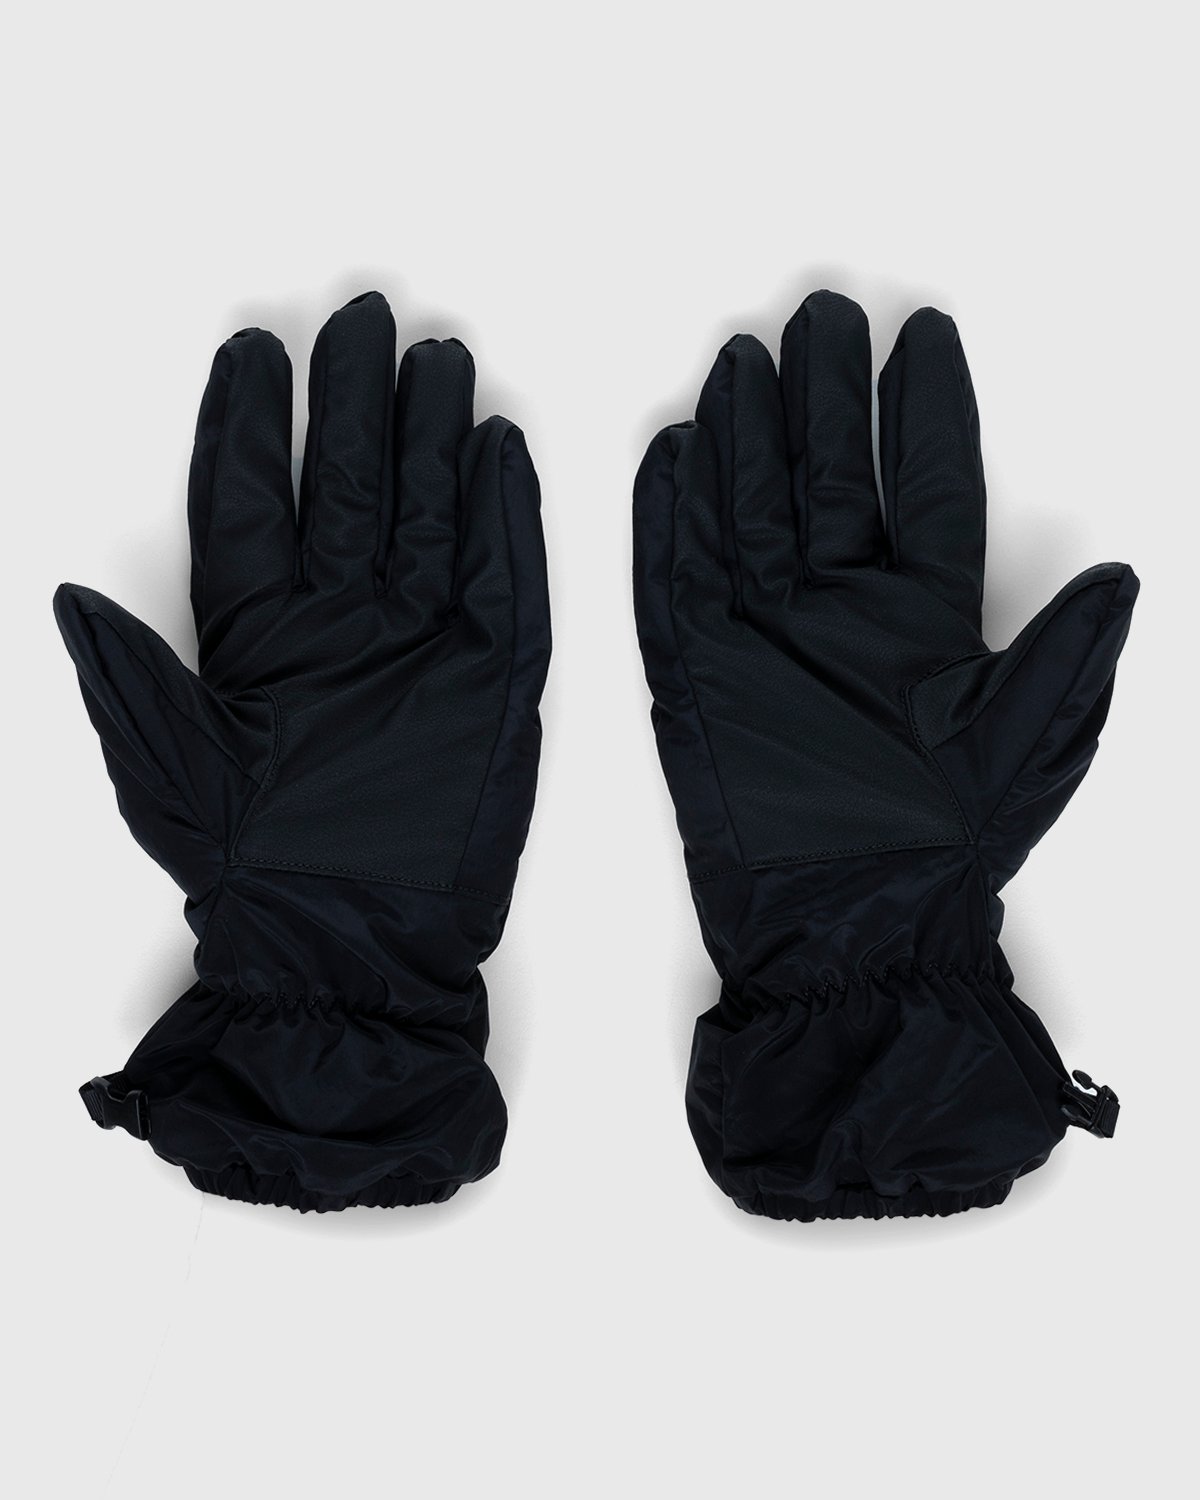 Stone Island - Gloves Black - Accessories - Black - Image 3